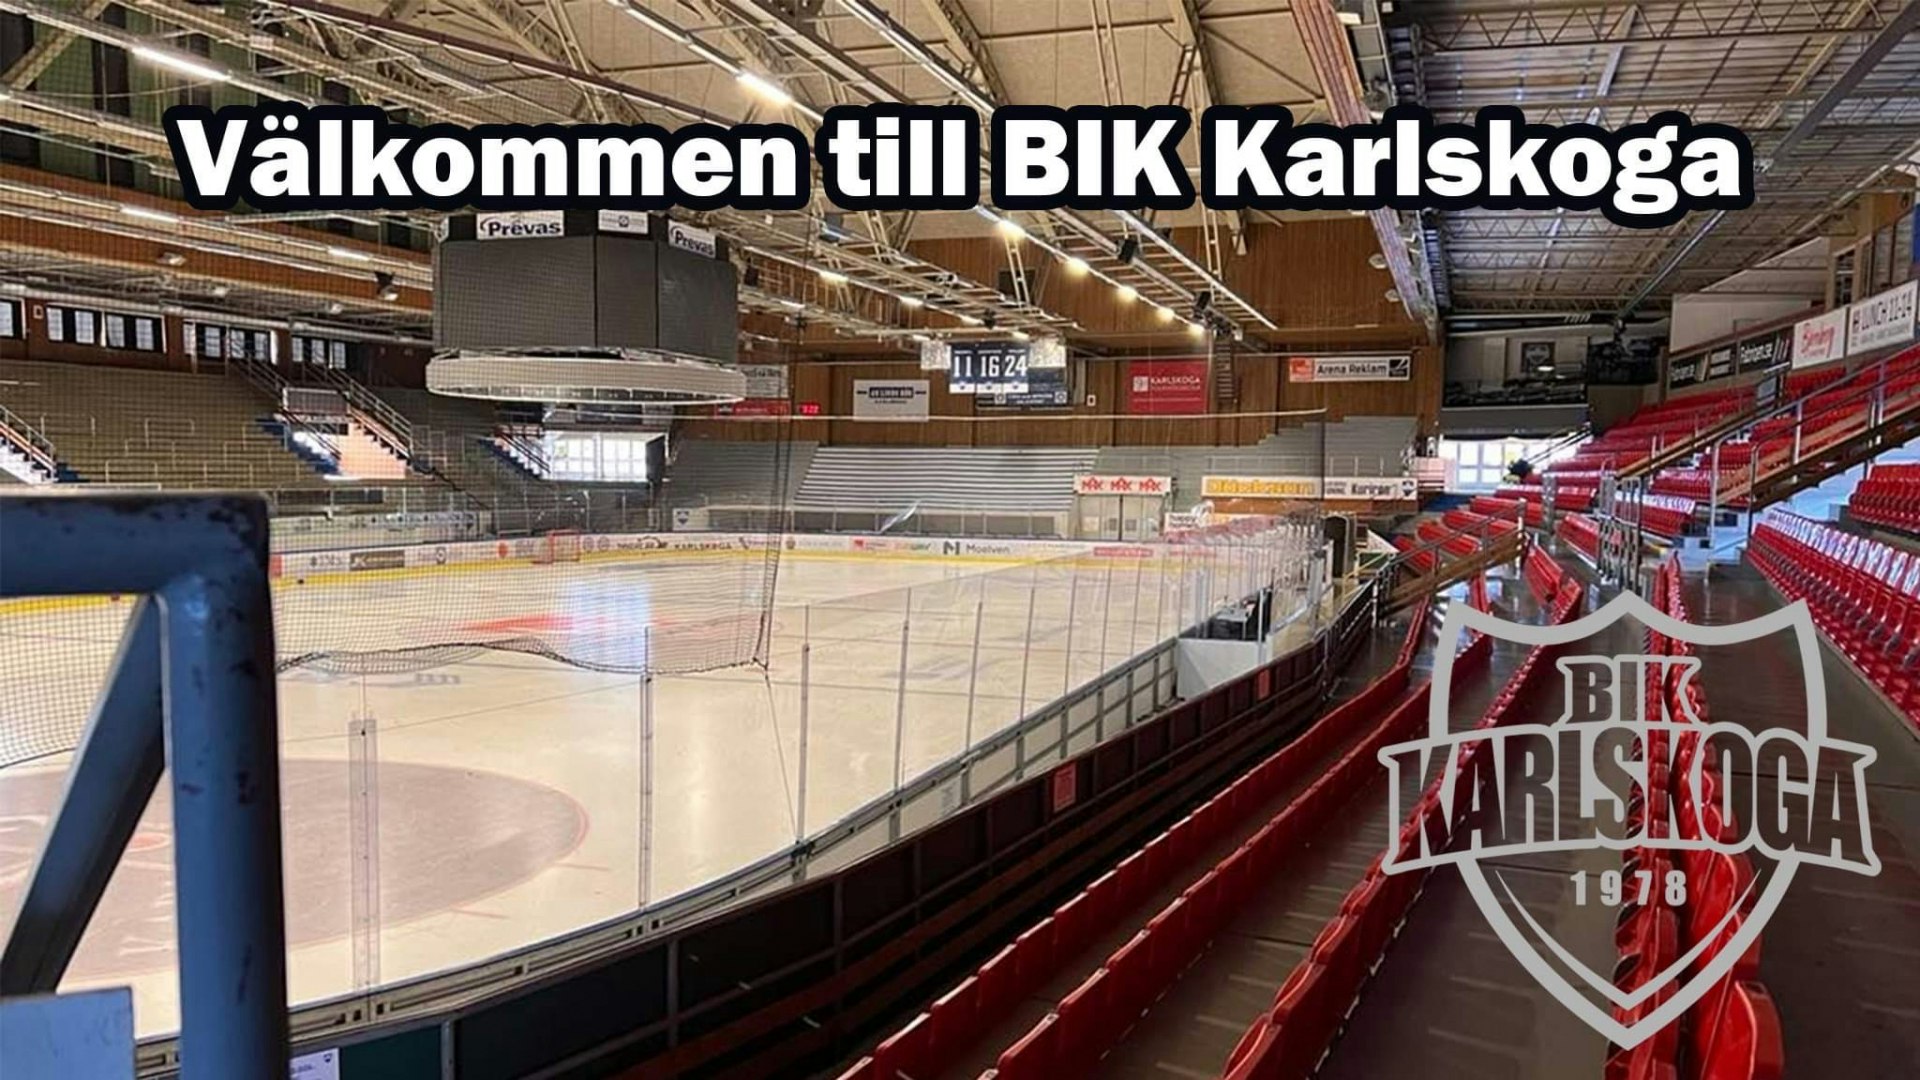 www.bikkarlskoga.se